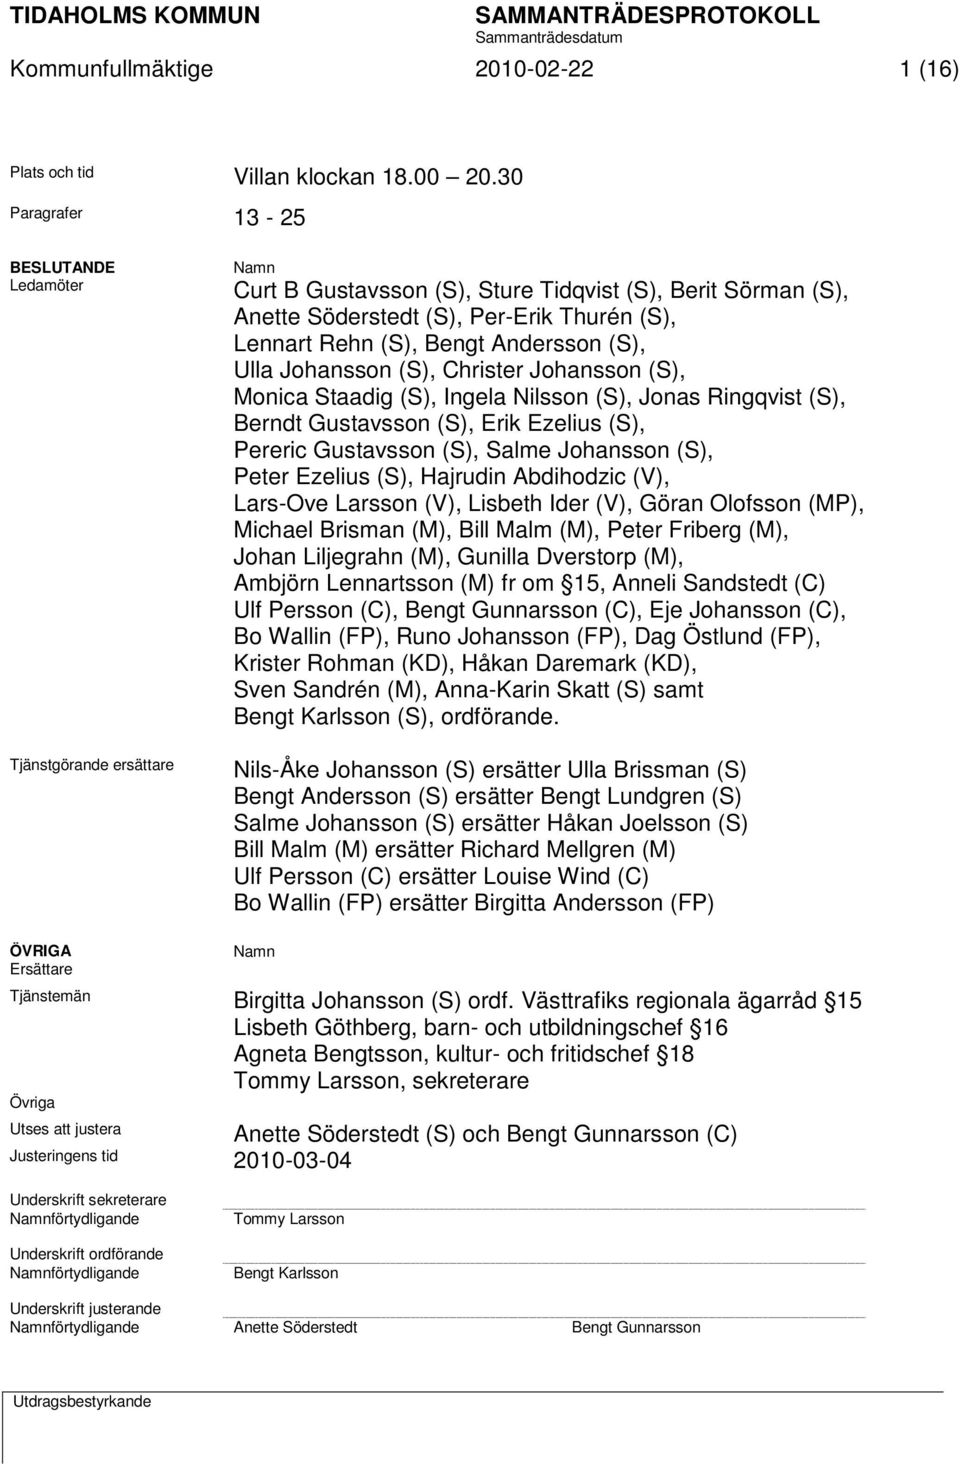 Andersson (S), Ulla Johansson (S), Christer Johansson (S), Monica Staadig (S), Ingela Nilsson (S), Jonas Ringqvist (S), Berndt Gustavsson (S), Erik Ezelius (S), Pereric Gustavsson (S), Salme